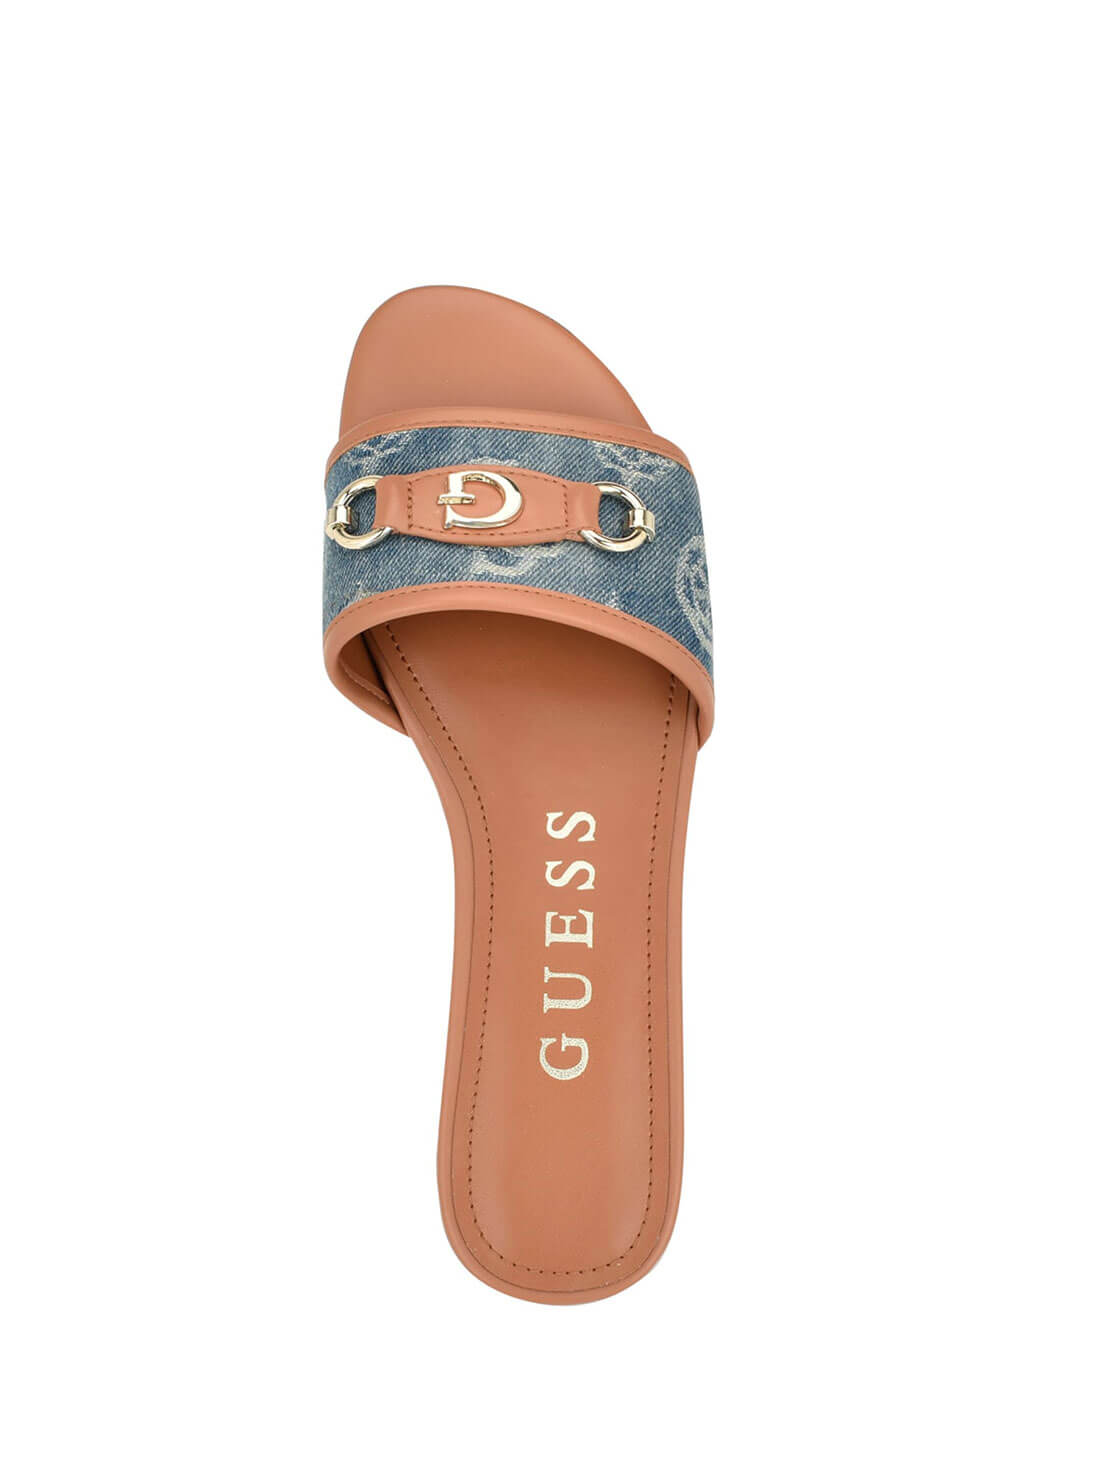 Blue Denim Logo Hammi Slide Sandals | GUESS Women's Shoes | top view